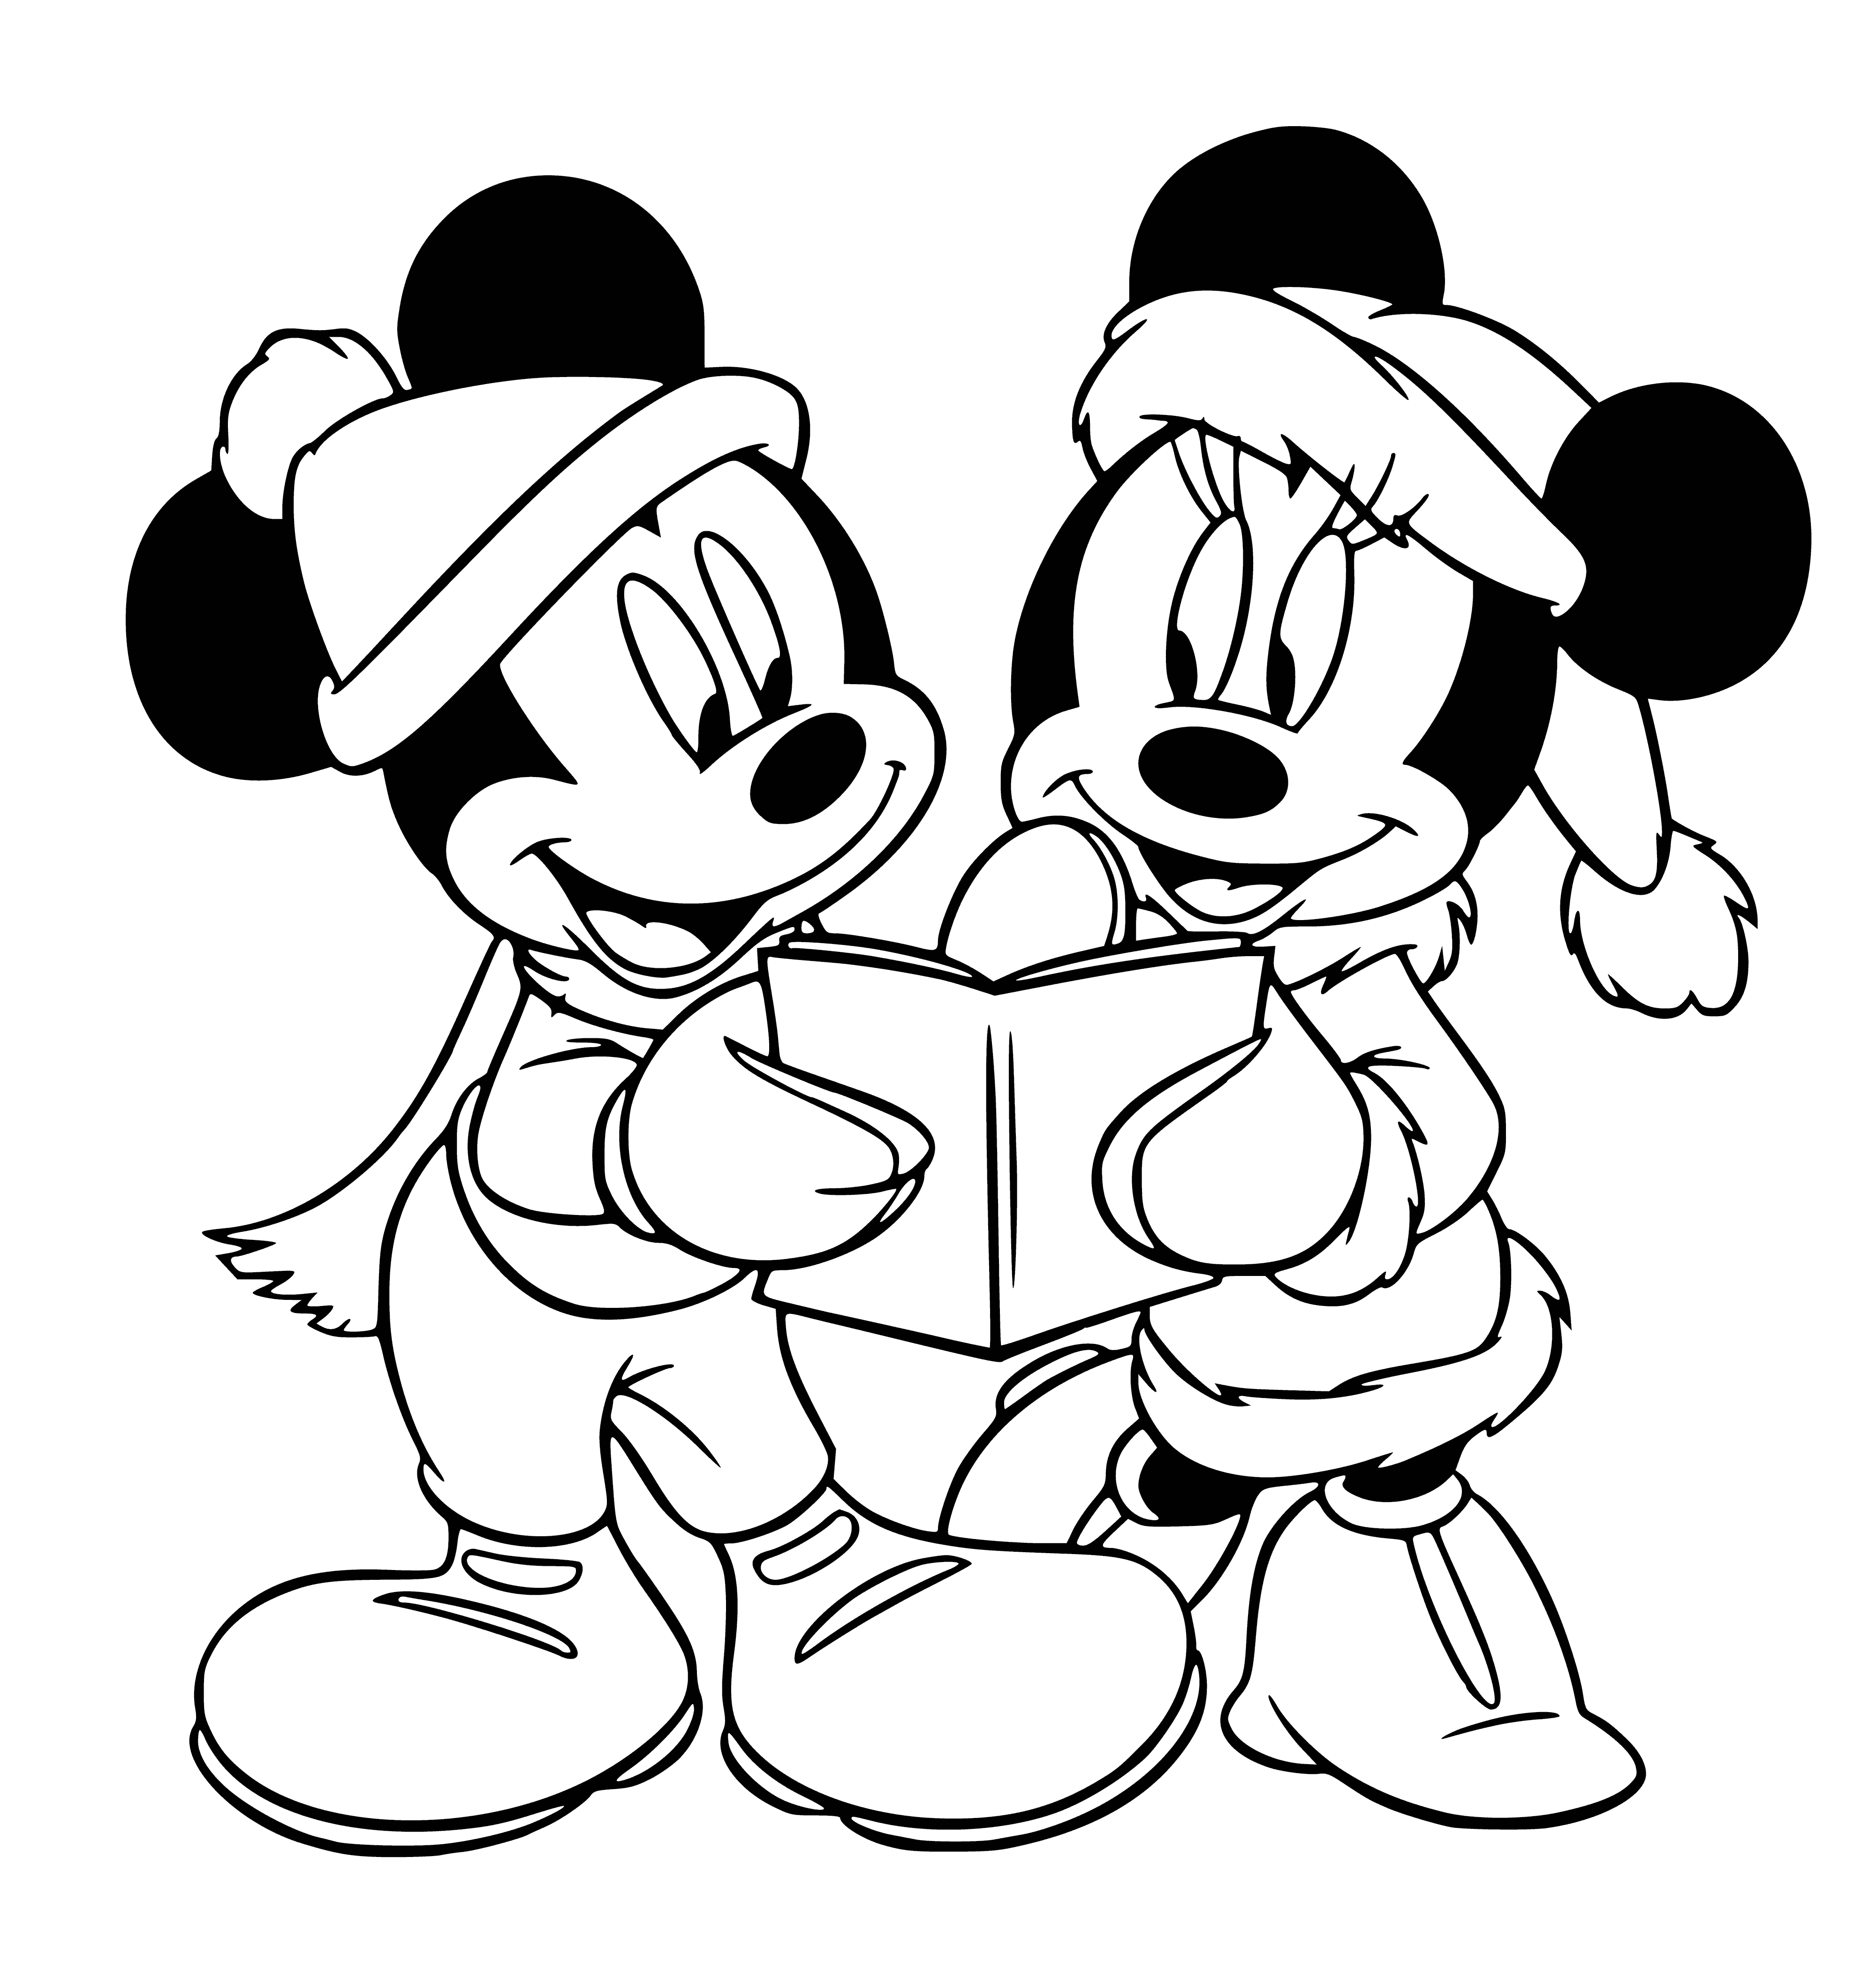 Mini et Mickey Mouse coloriage